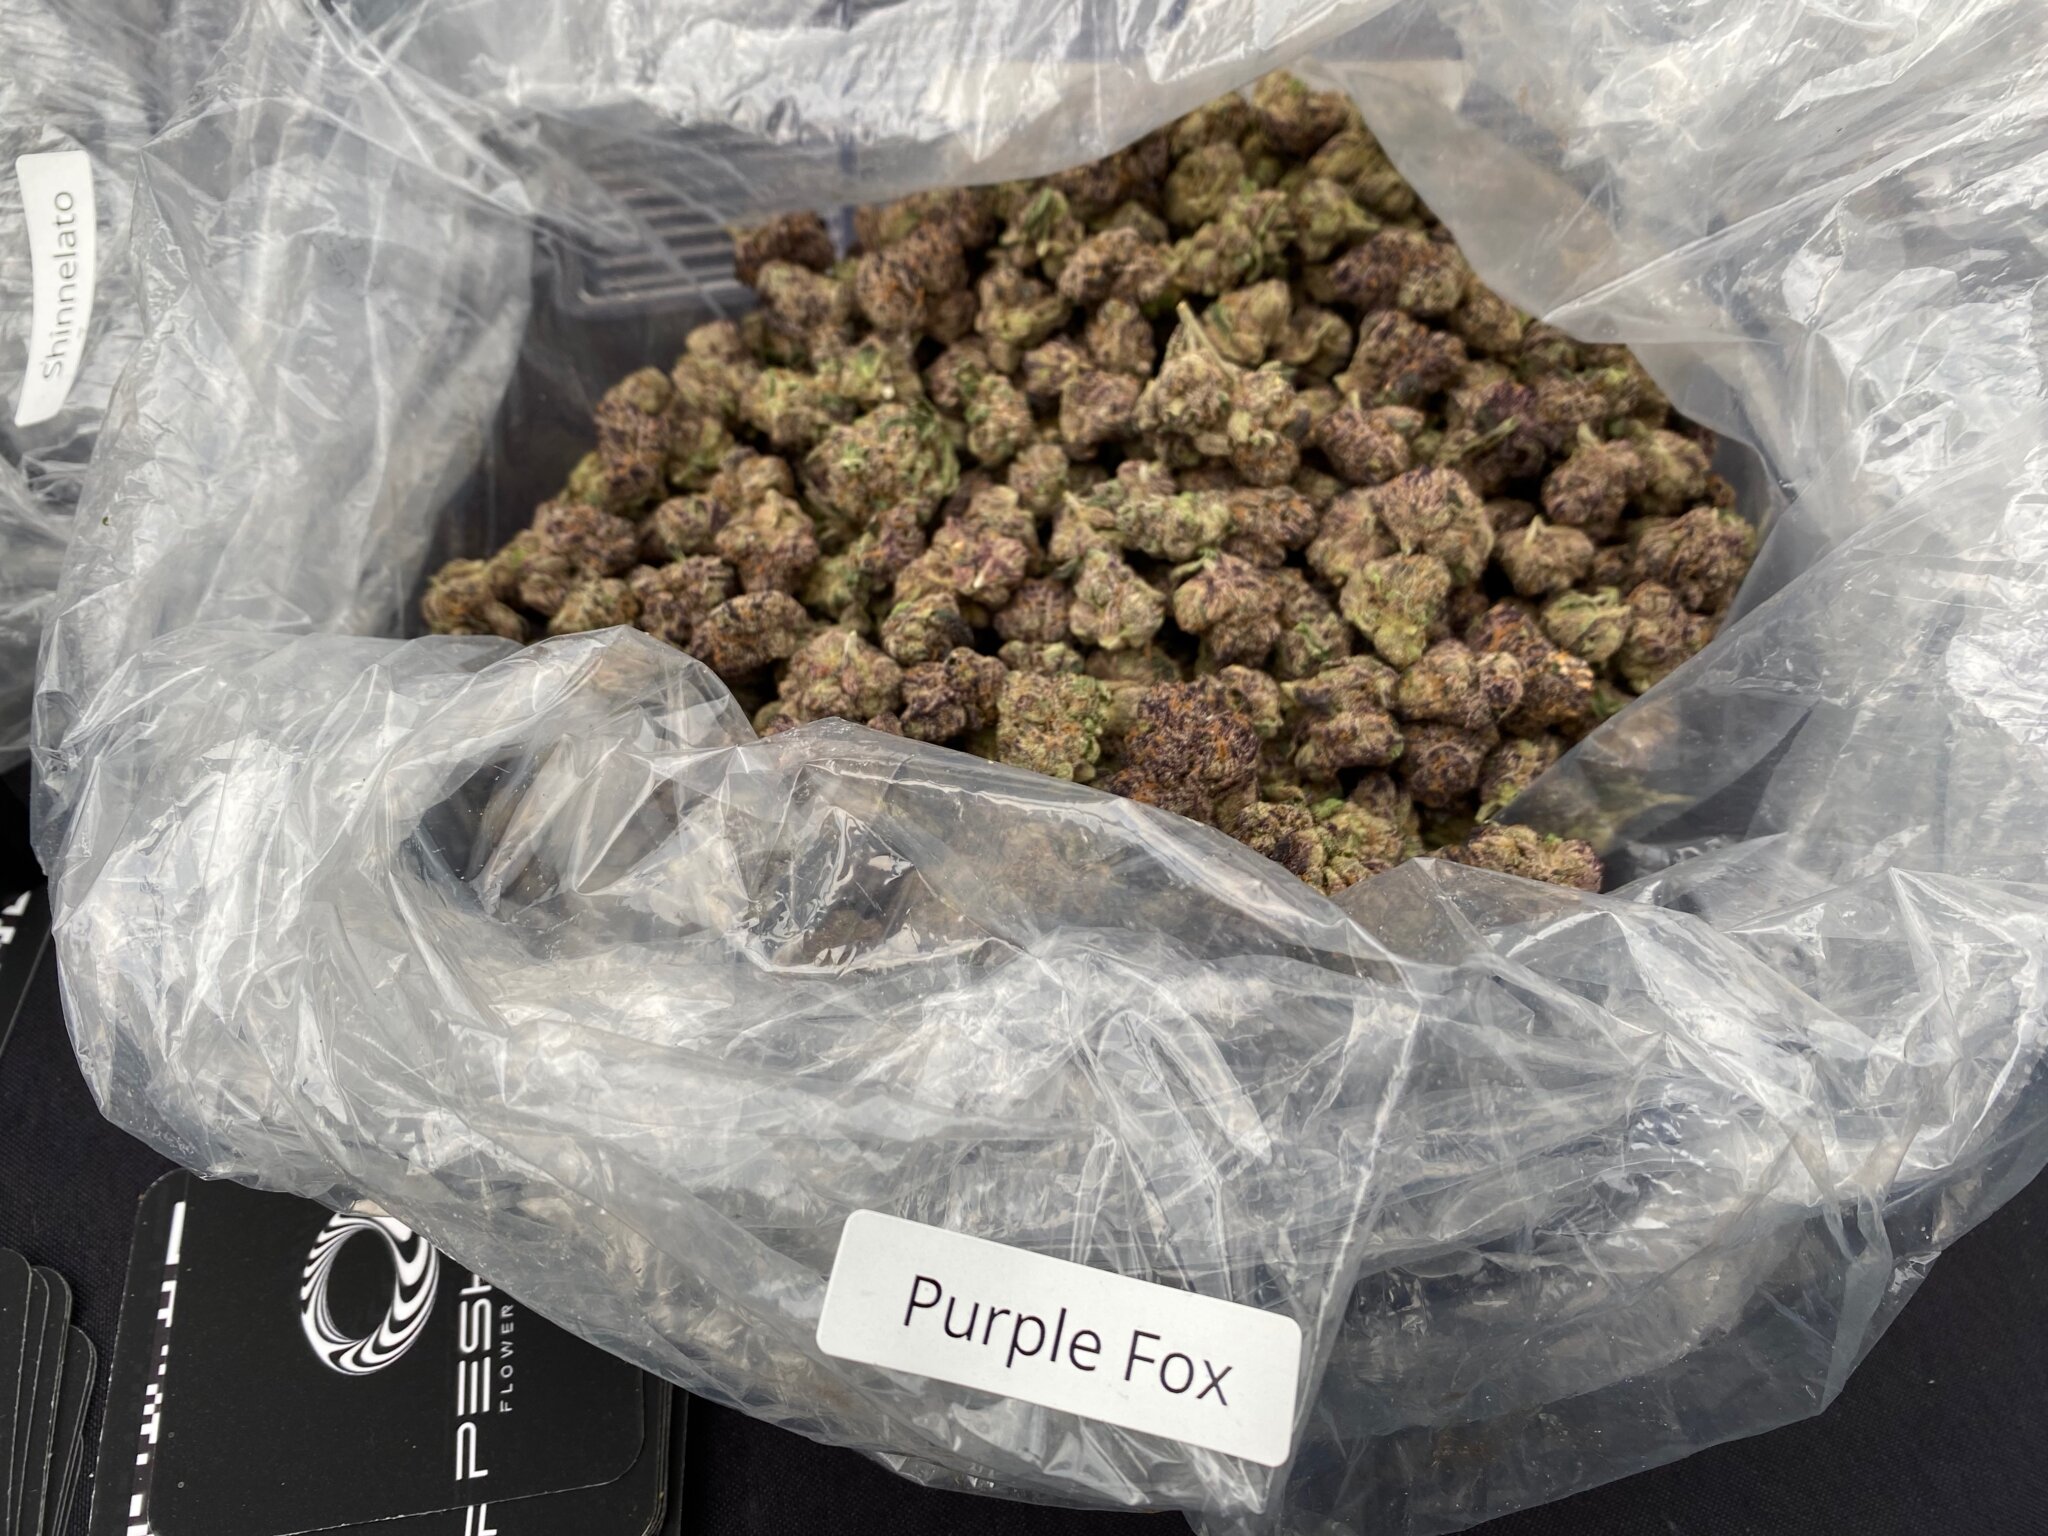 Peshaun Purple Fox cannabis flower, grown on the Shinnecock reservation